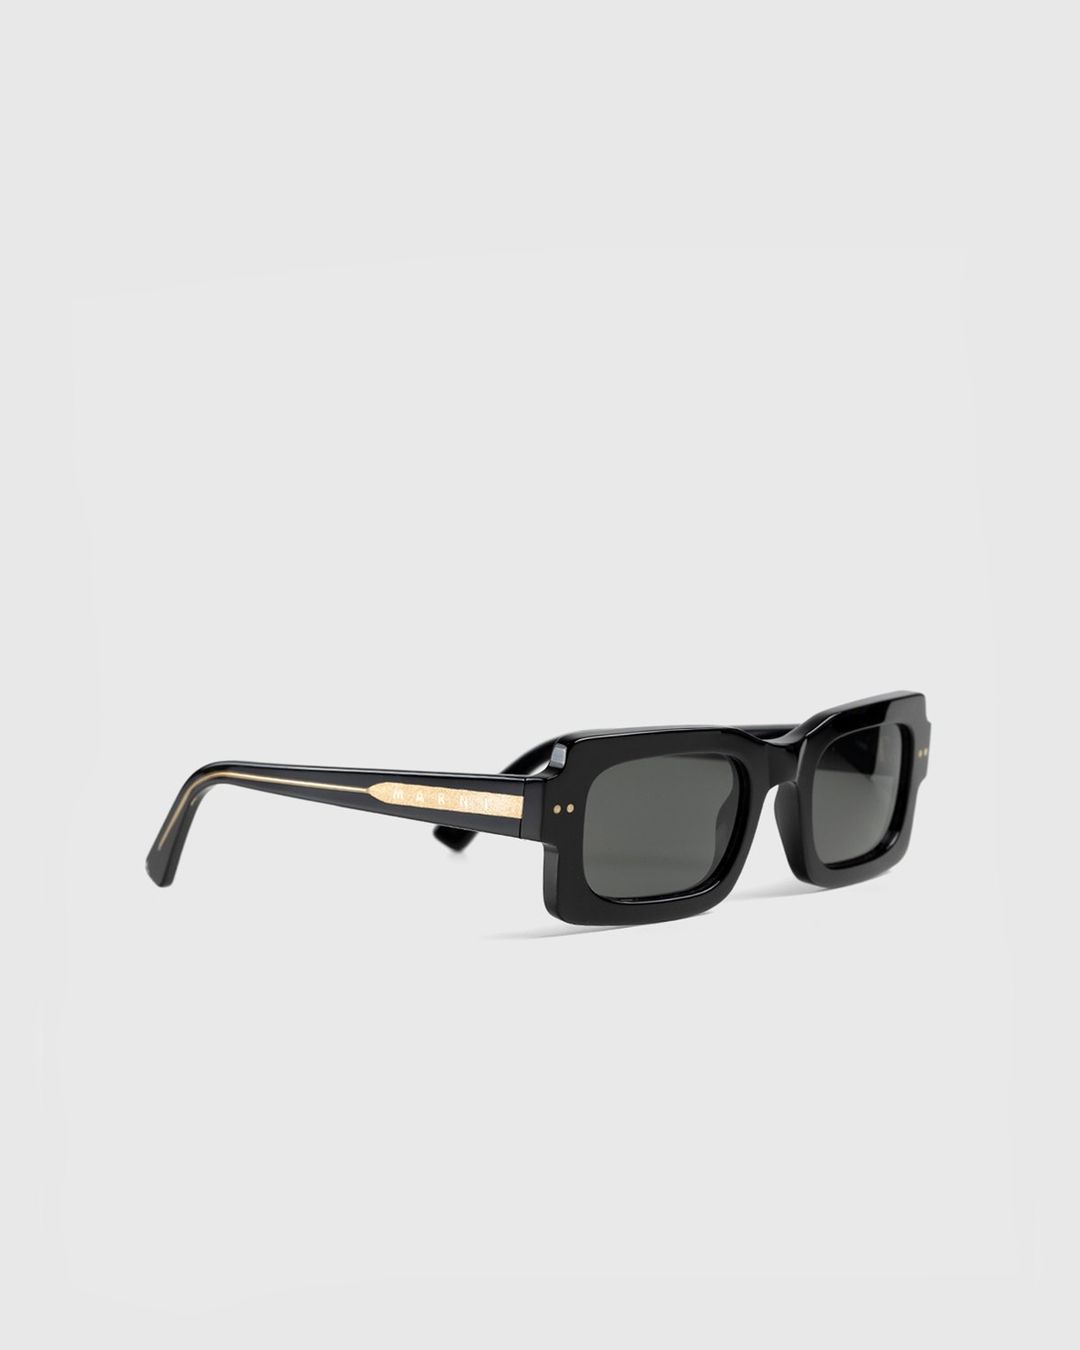 Marni – Lake Vostok Sunglasses Black | Highsnobiety Shop